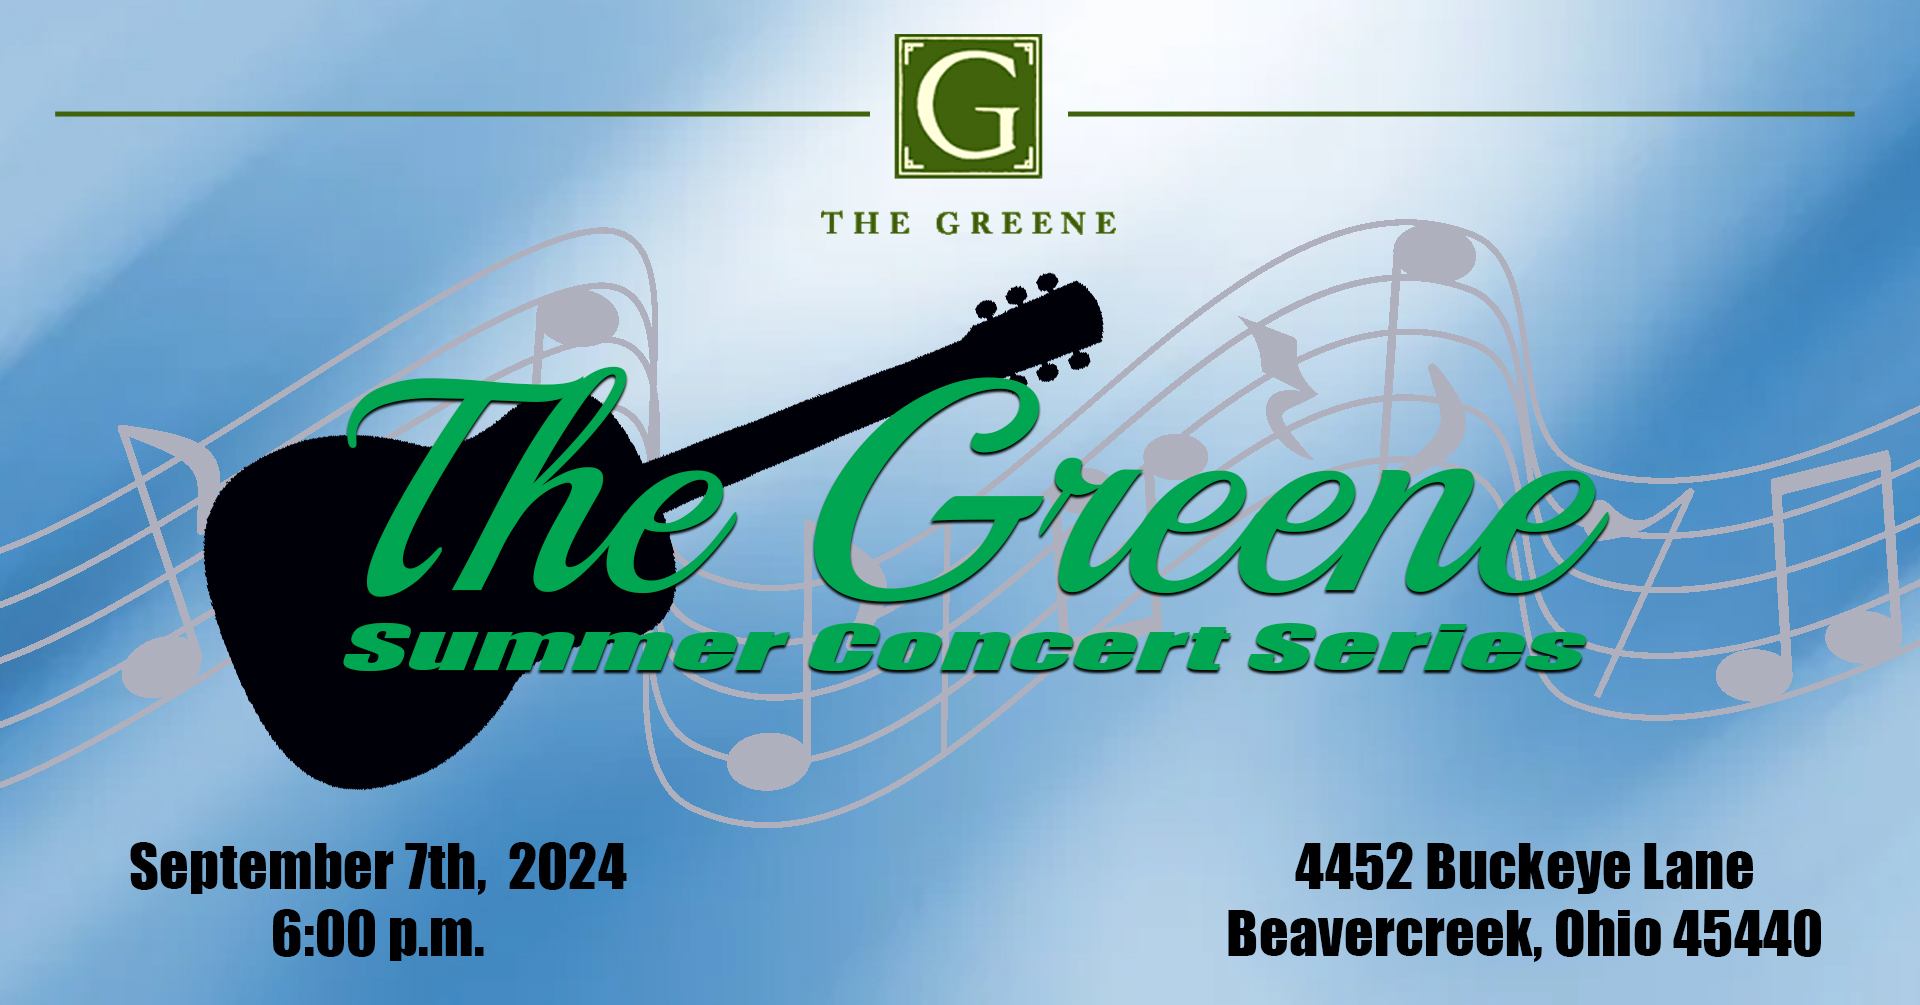 The Greene summer concert series